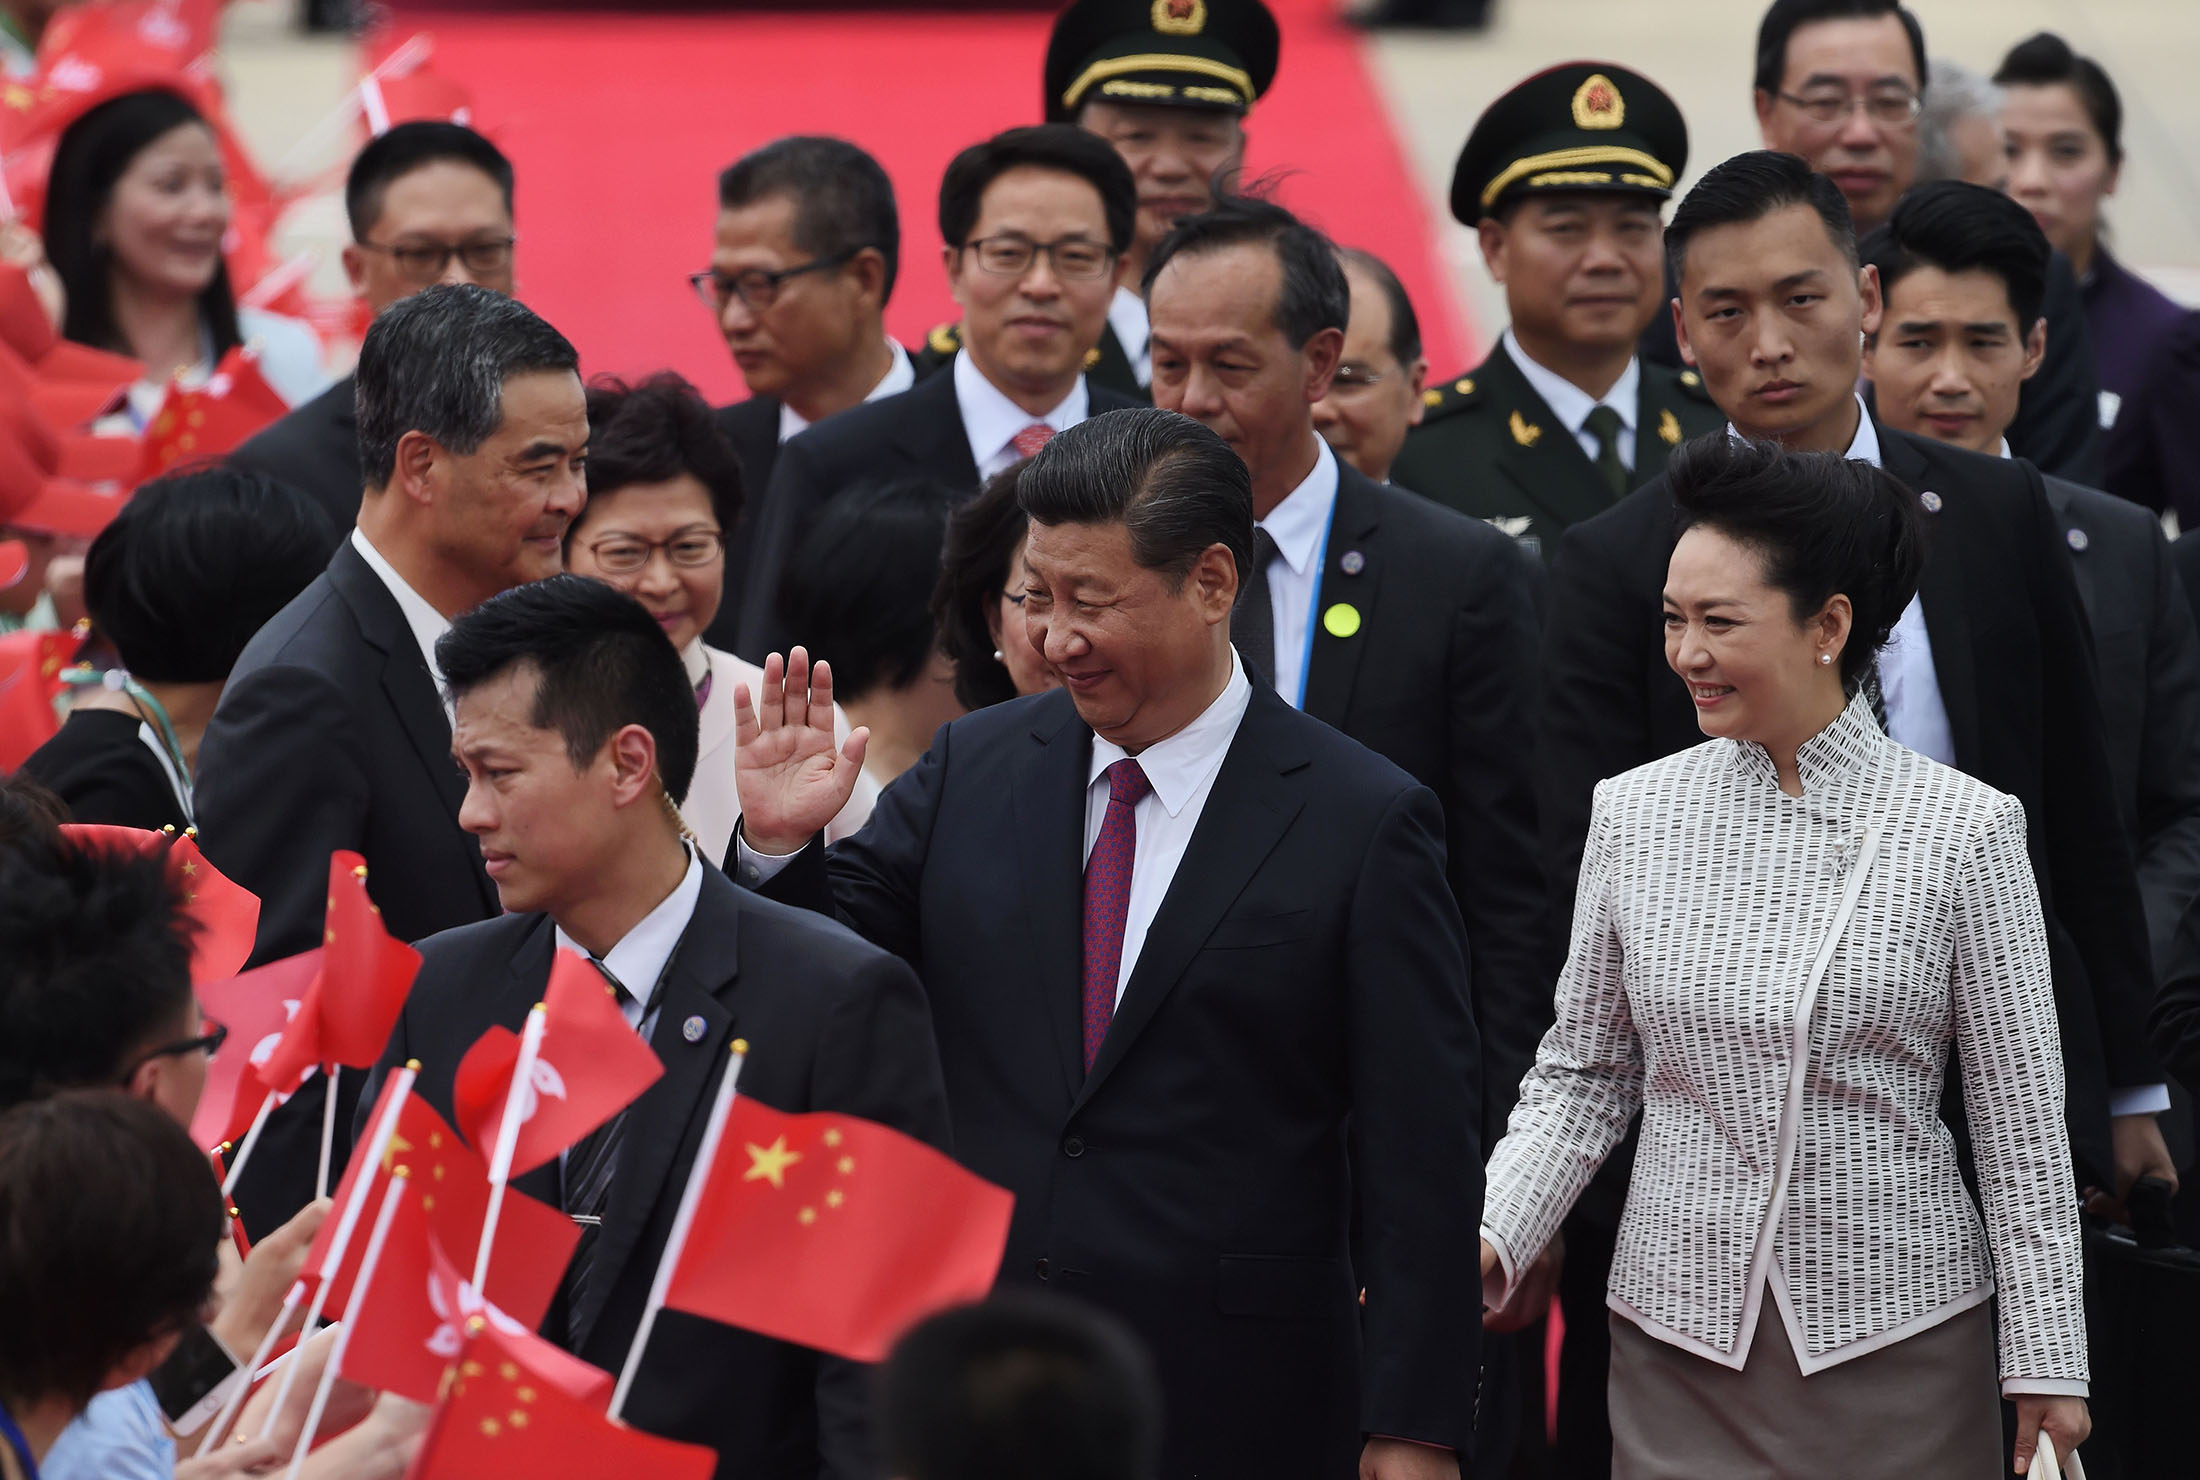 China's President Xi Jinping and his wife Peng Liyuan arrive in Hong Kong on June 29.
